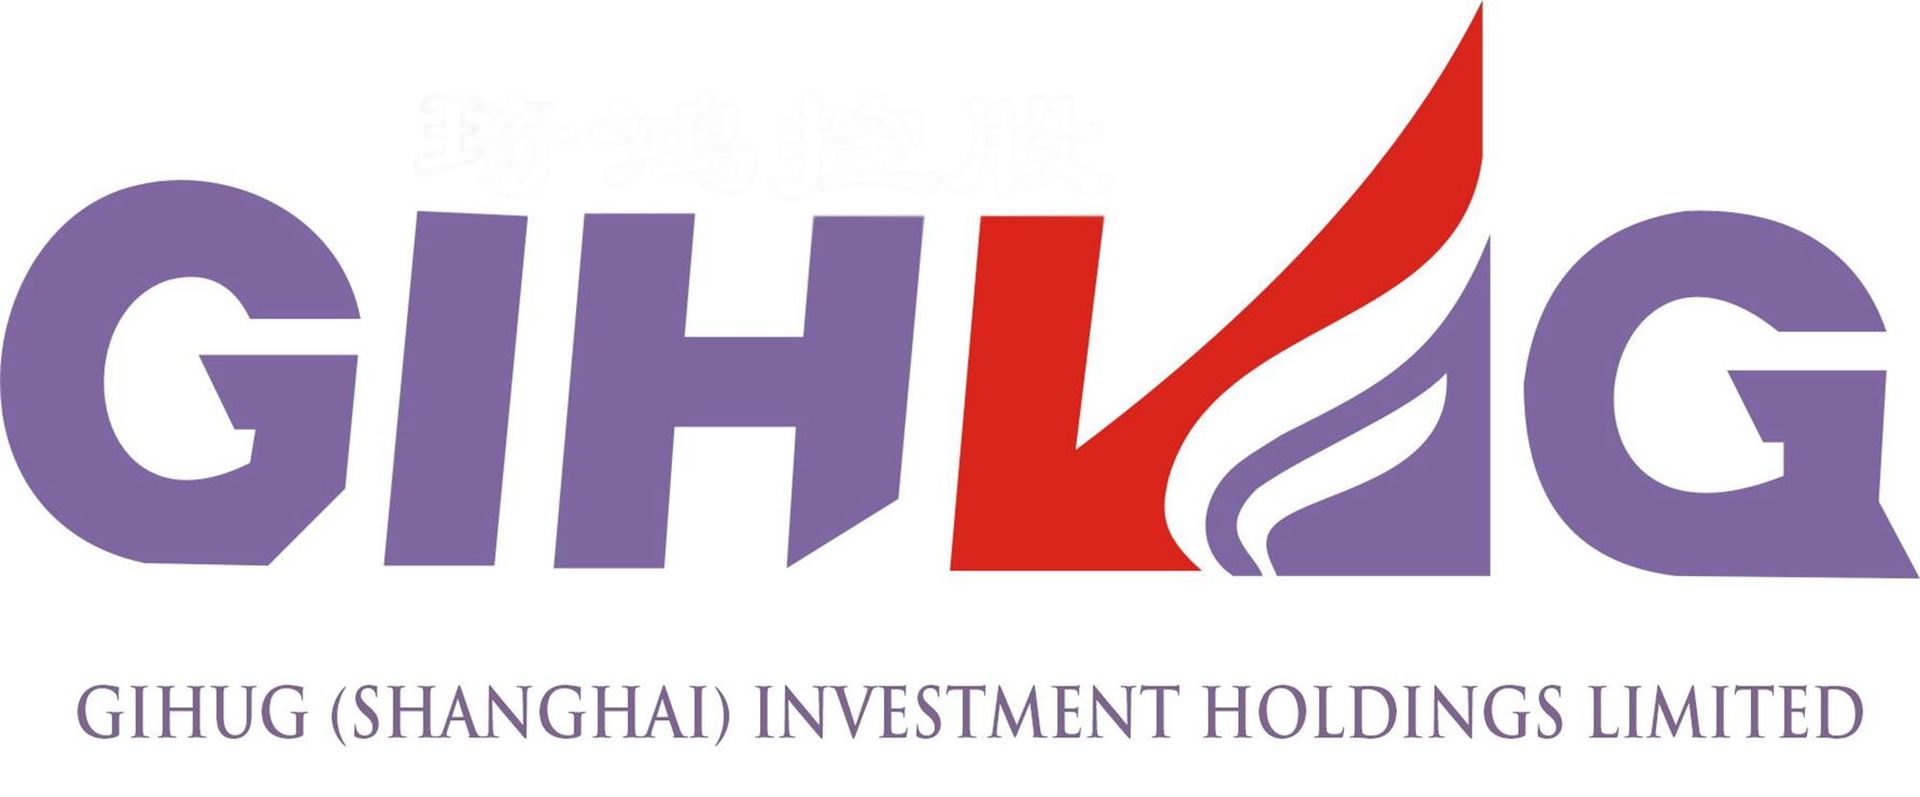 Gihug (shanghai) Investment Holdings Limited logo